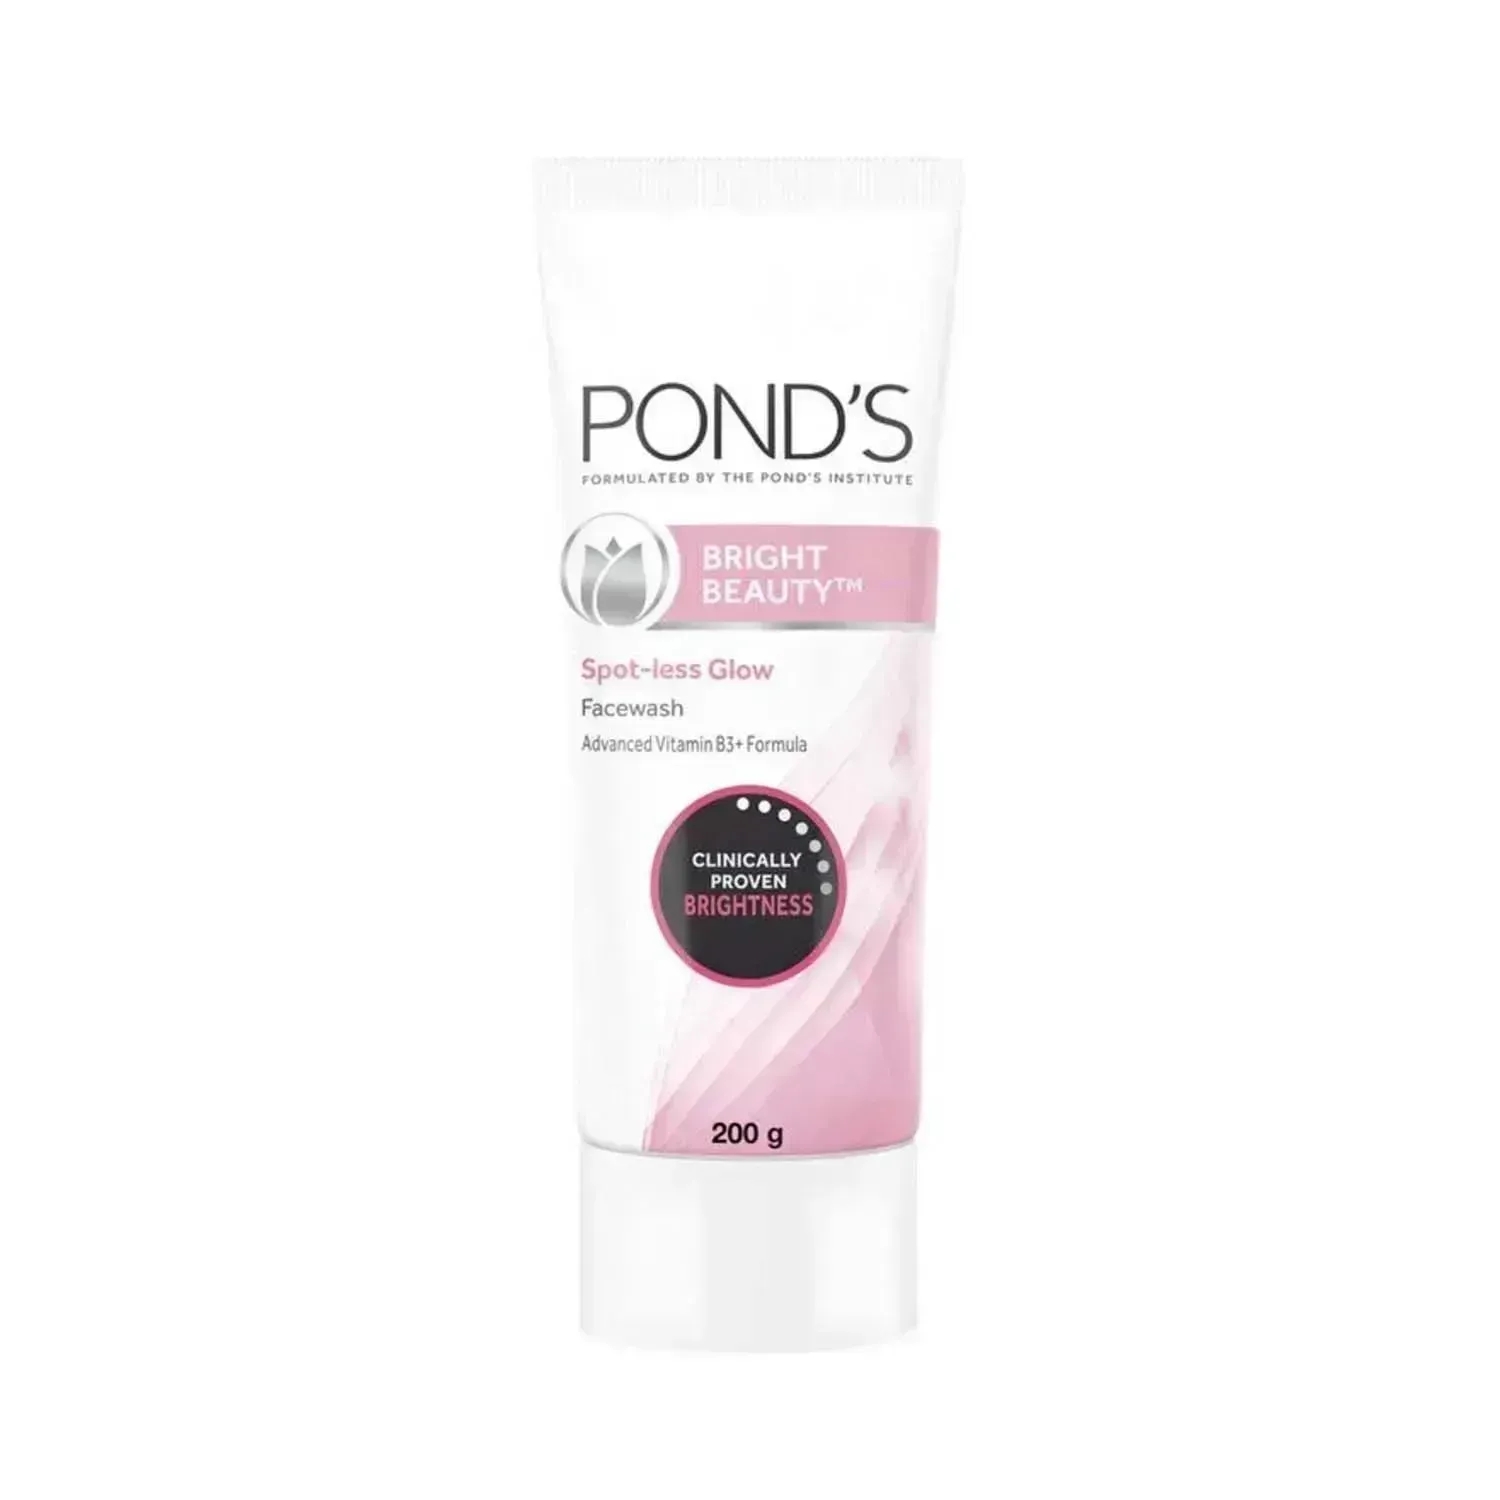 Pond's | Pond's Bright Beauty Spot-Less Glow Face Wash - (200g)